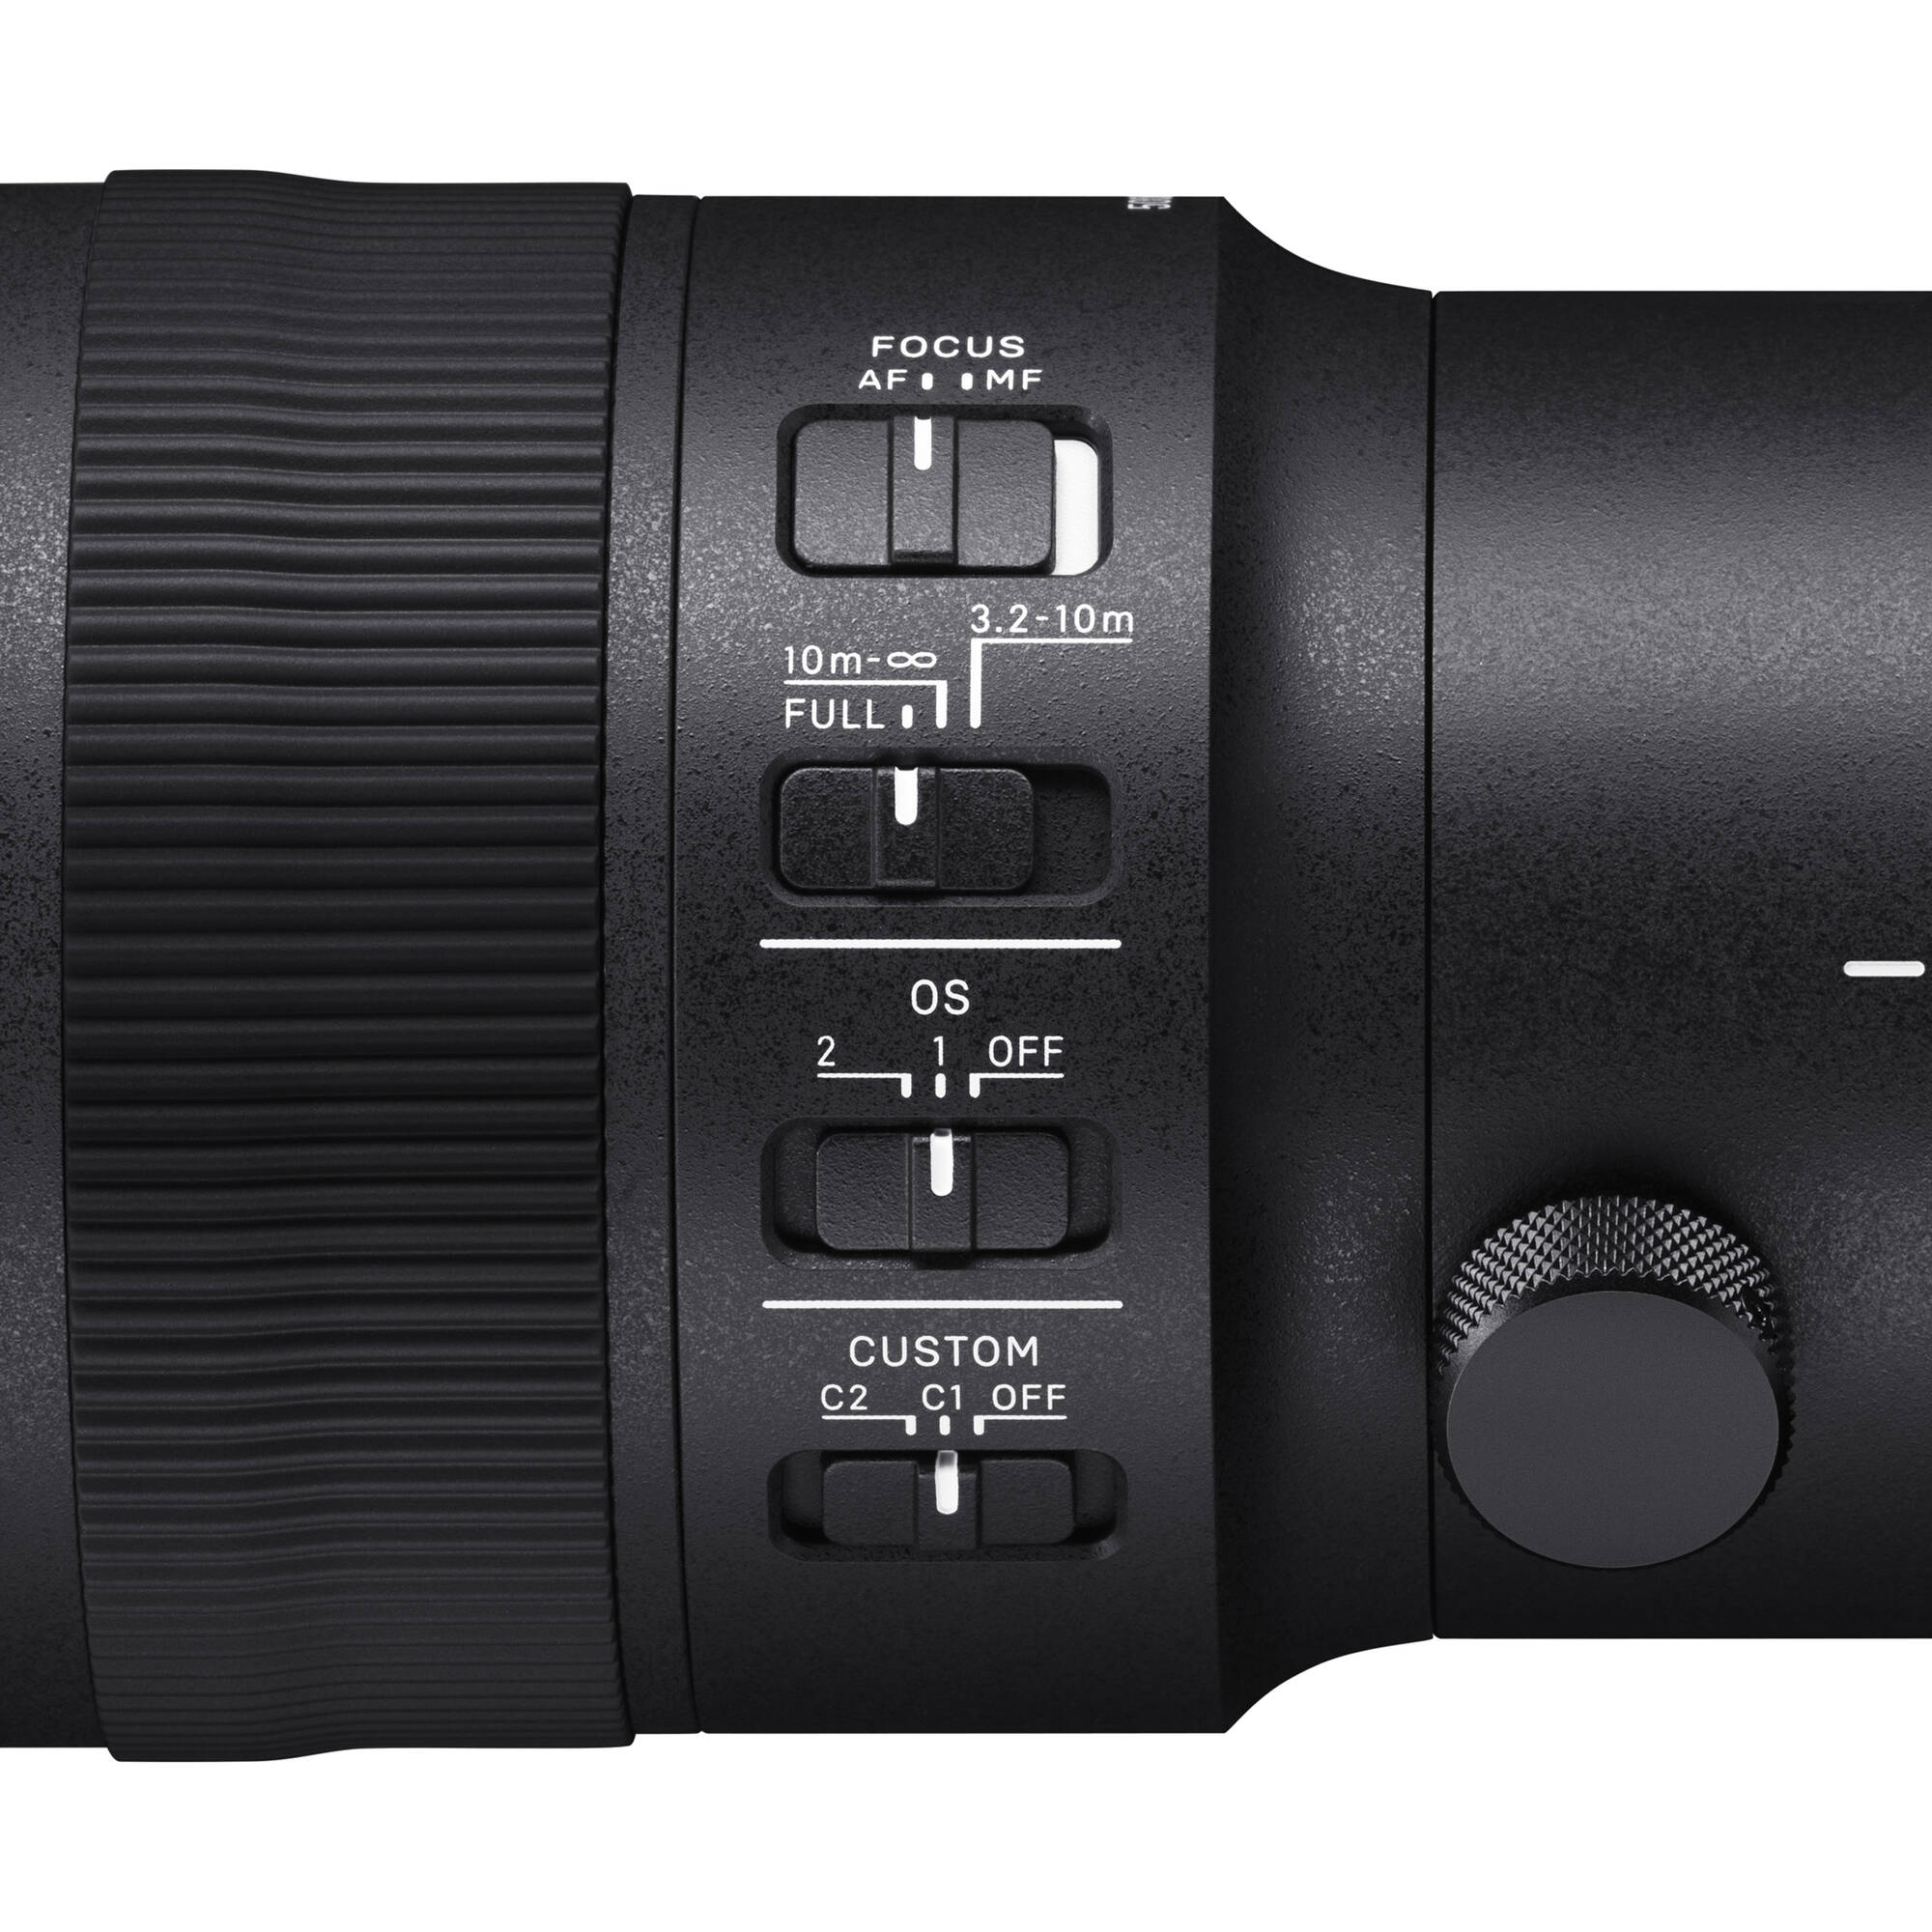 Sigma 500 mm f / 5.6 dg dn os sportive Lens - Sony e